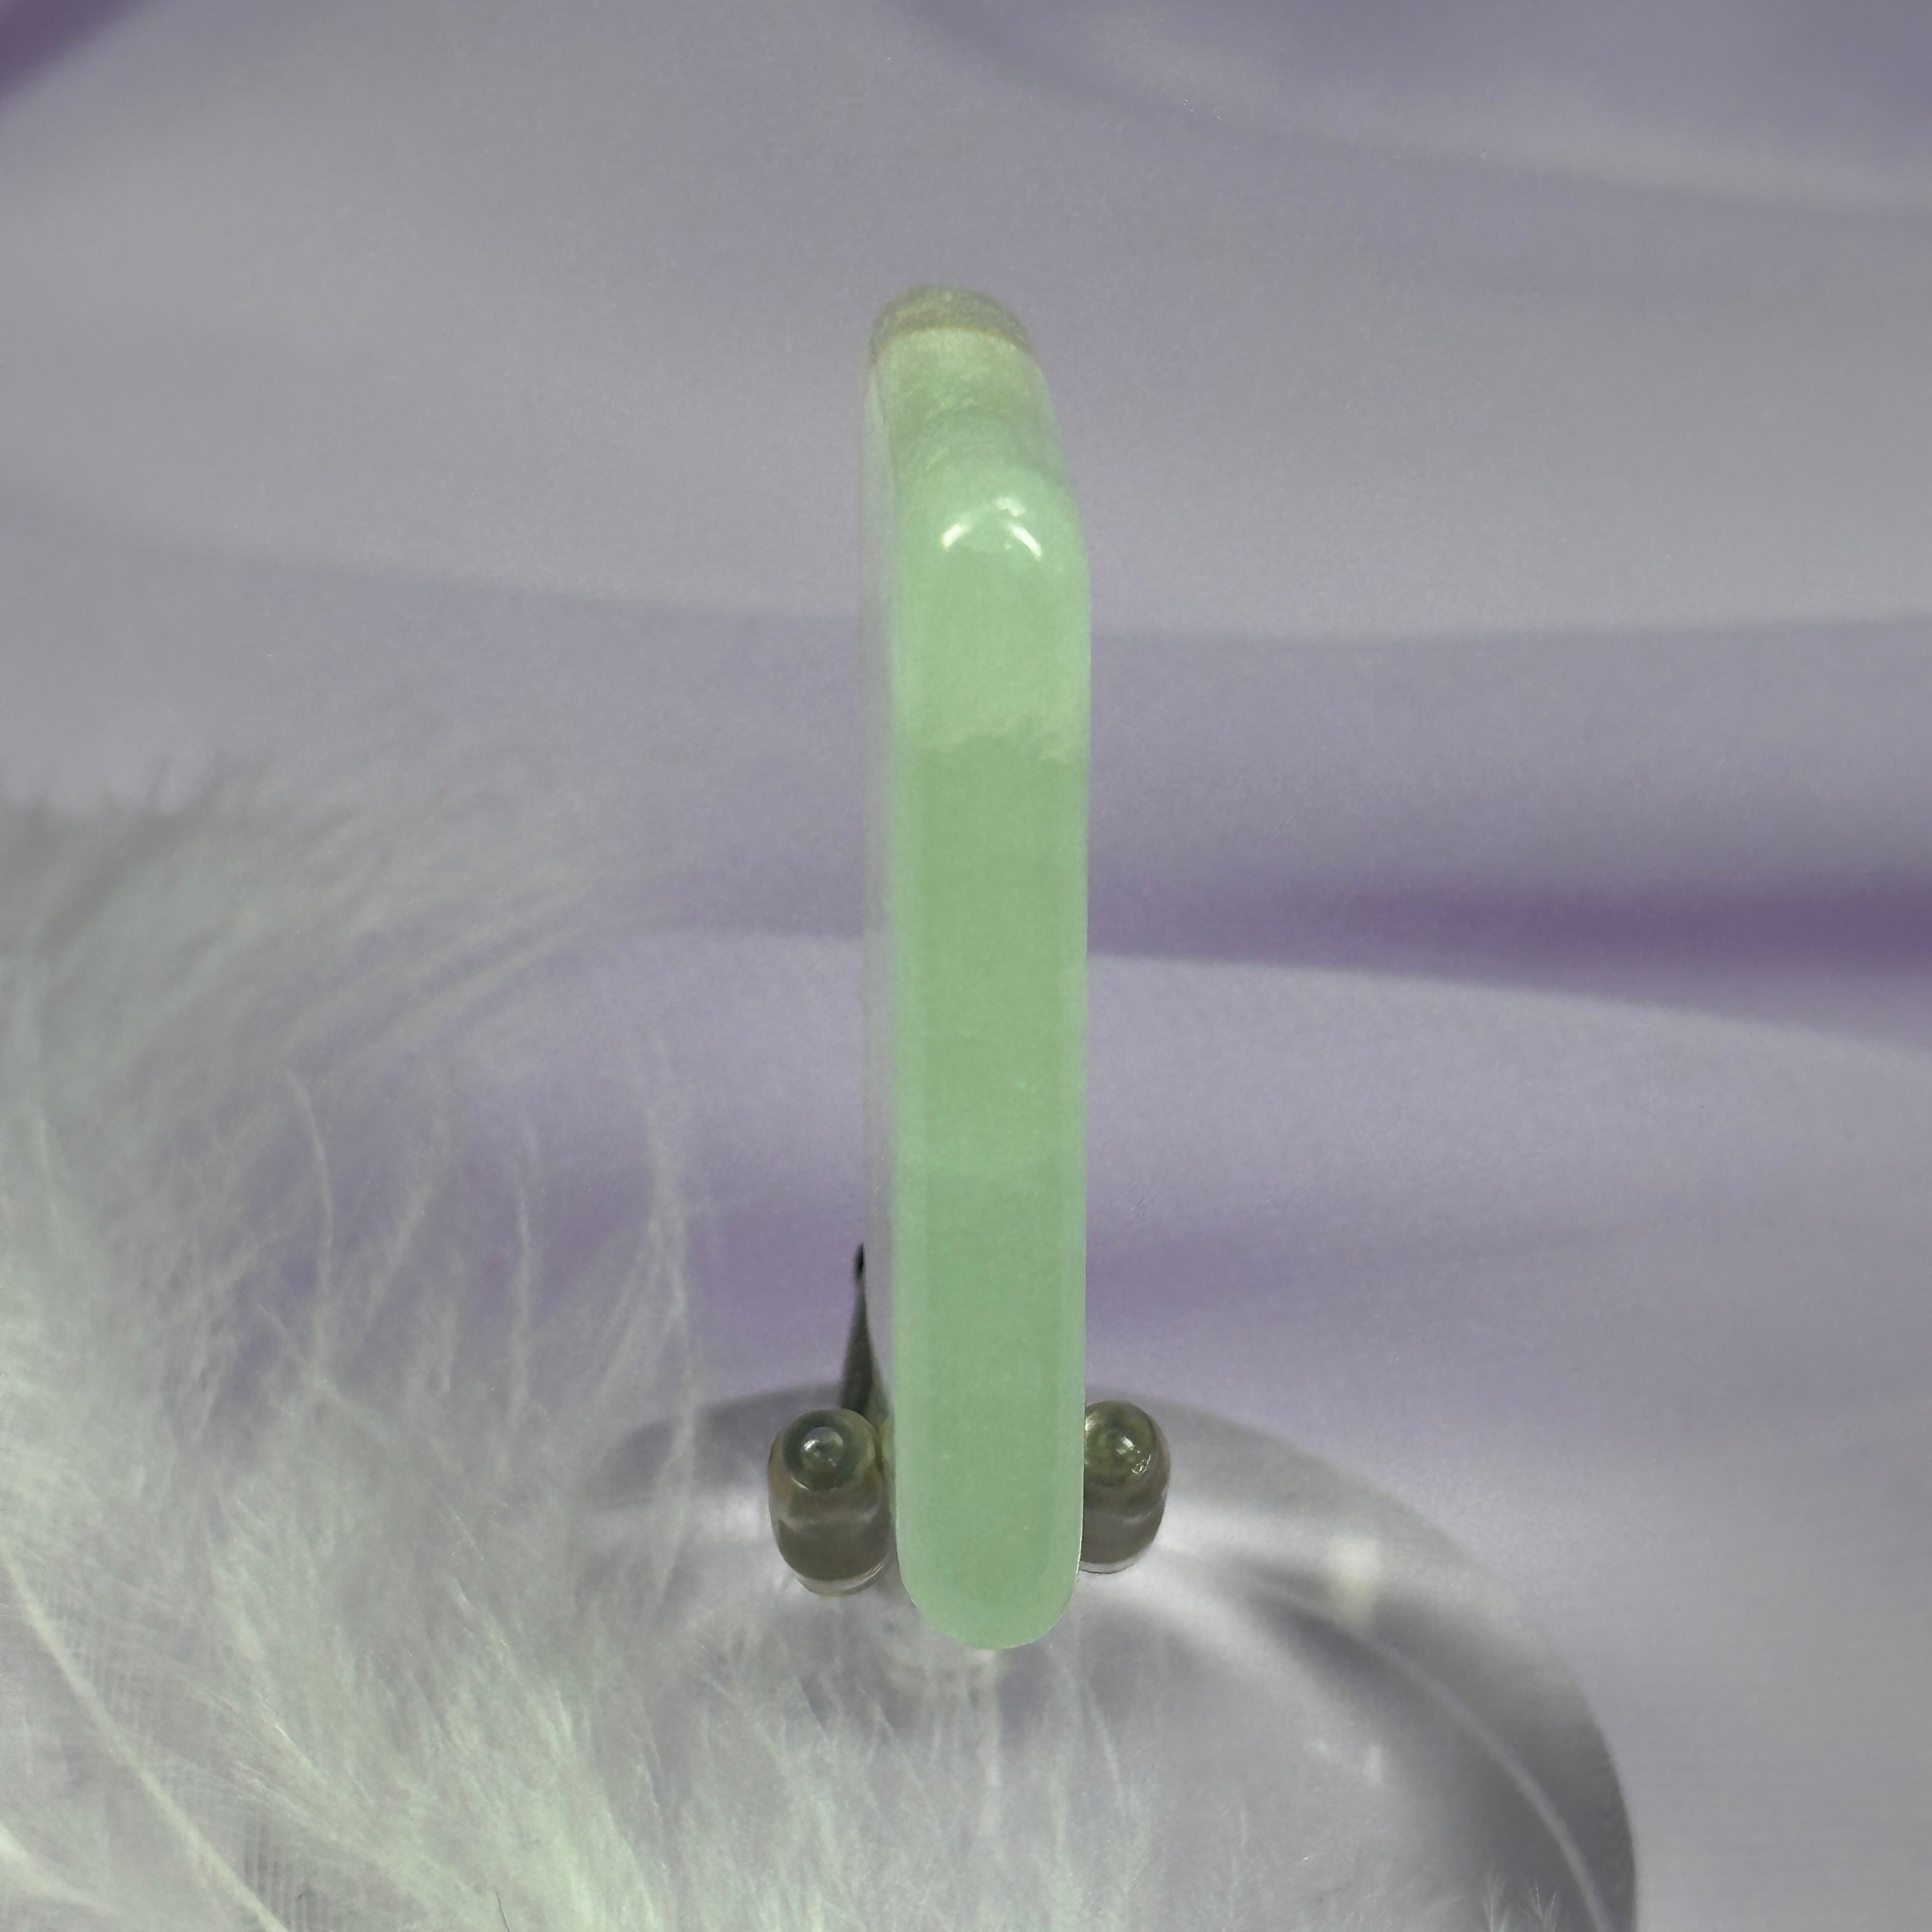 Banded Green Calcite crystal polished slice 16.6g SN55656